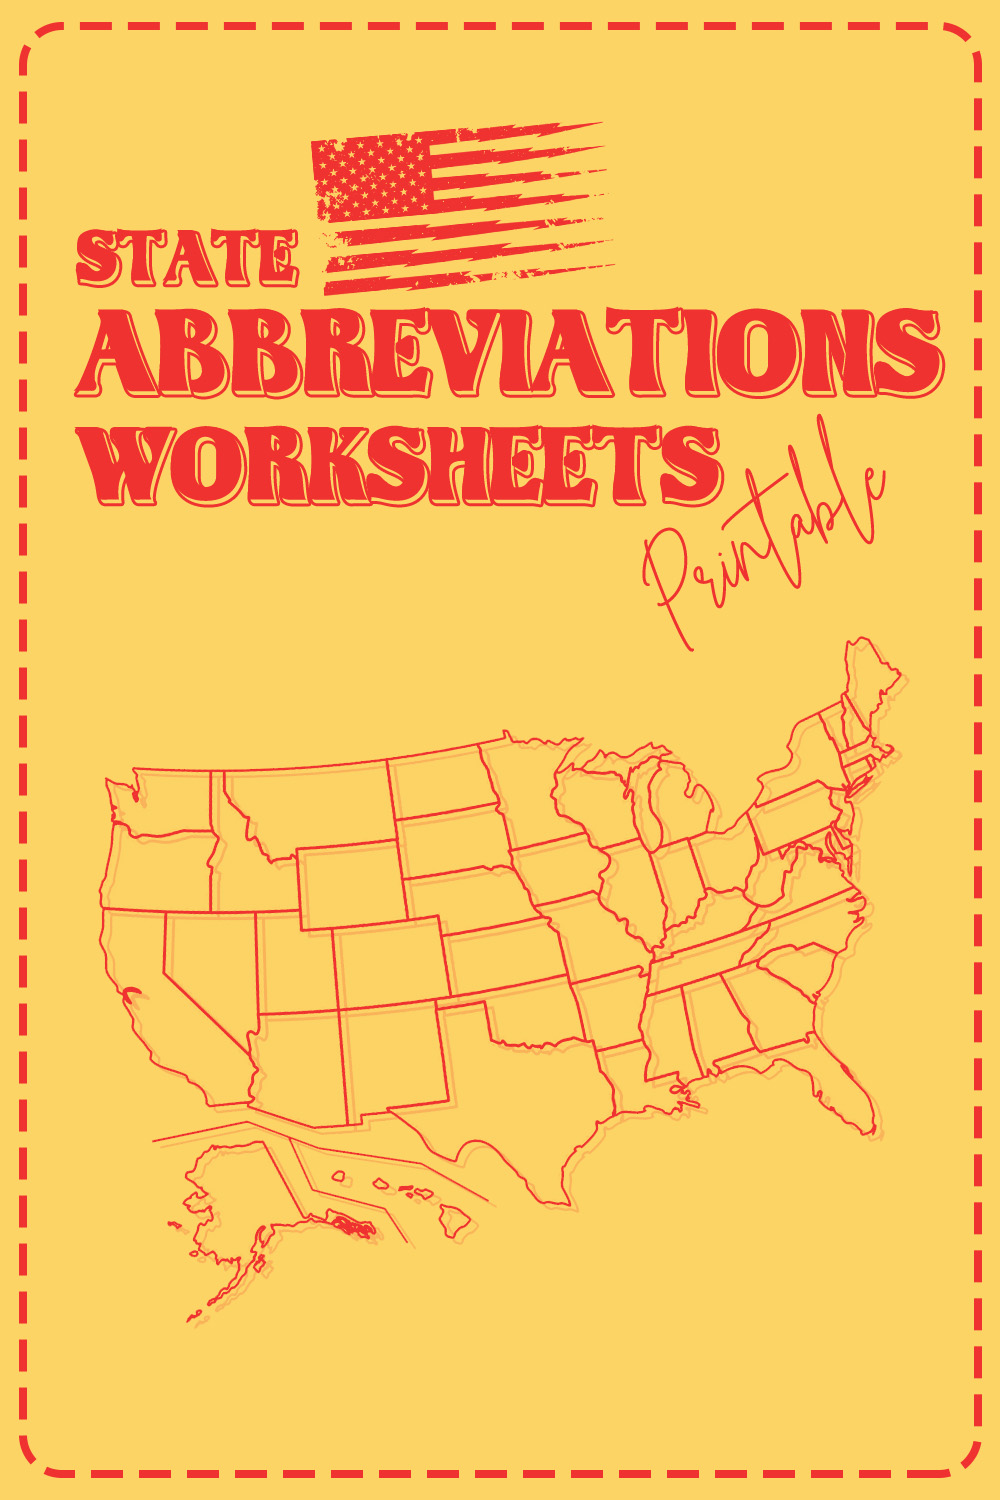 State Abbreviations Worksheet Printable